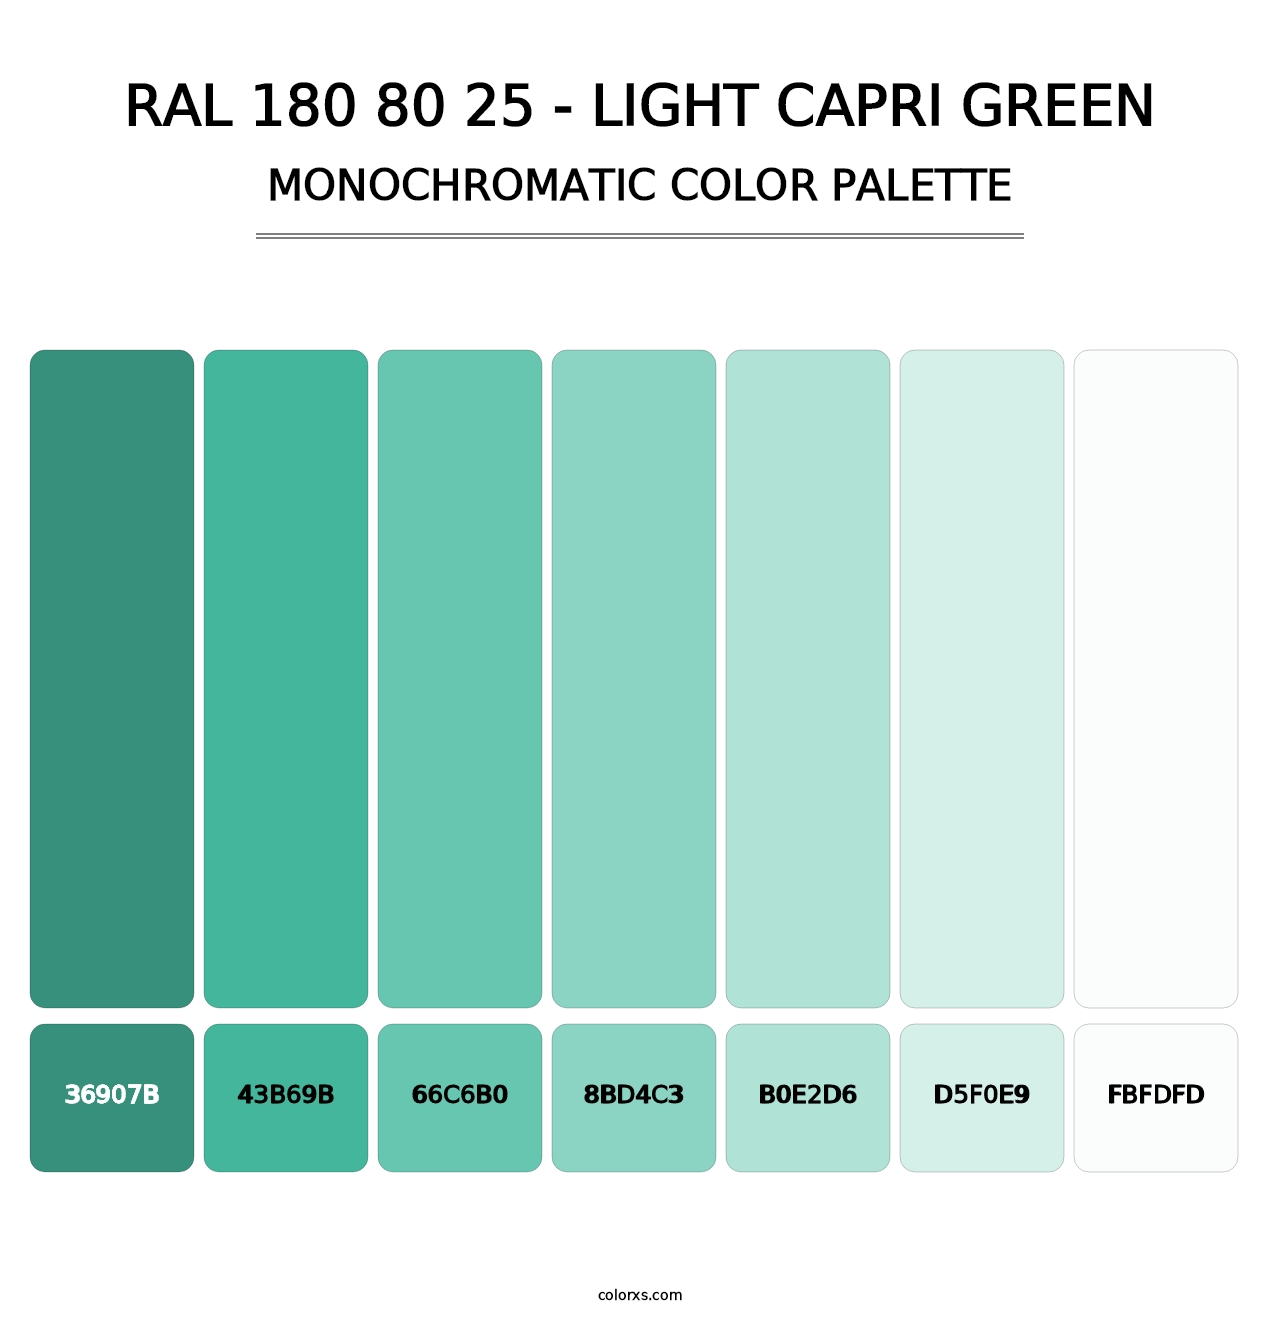 RAL 180 80 25 - Light Capri Green - Monochromatic Color Palette